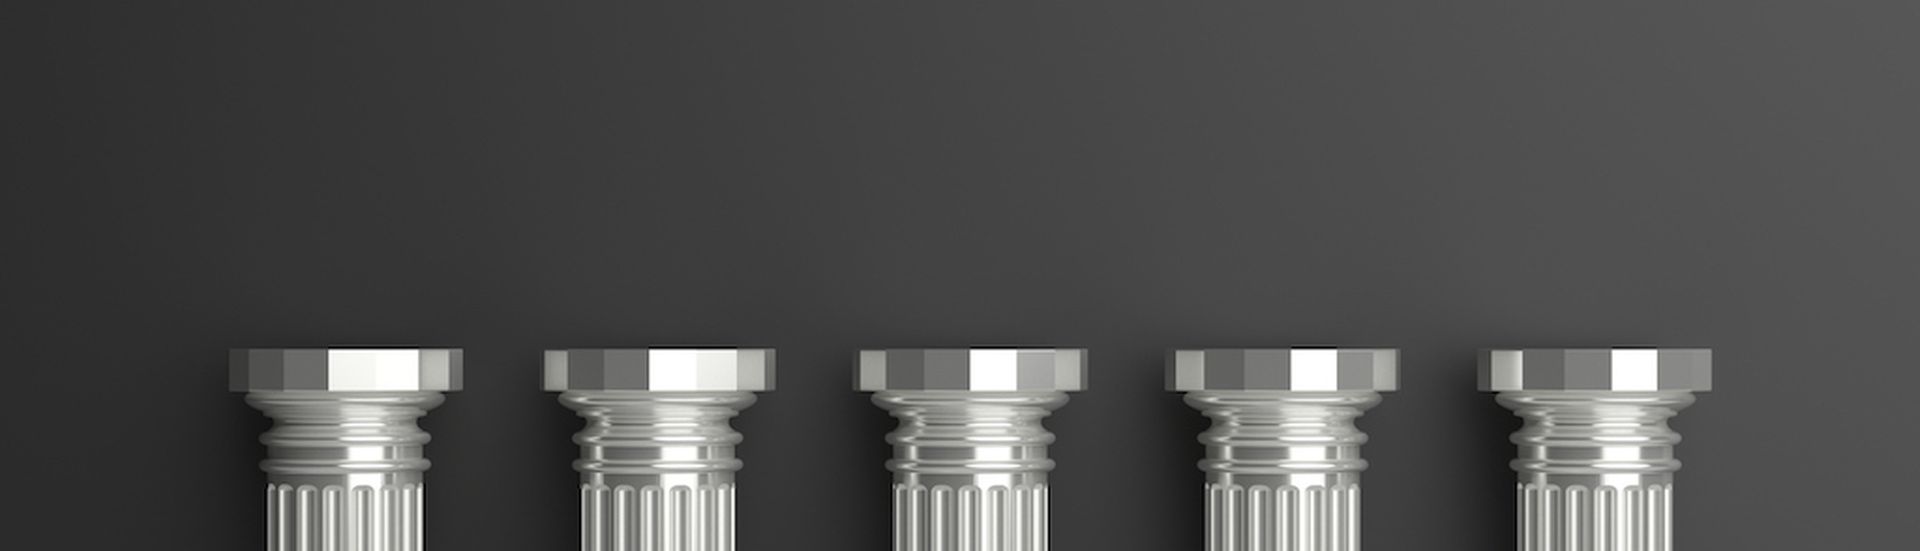 Five columns, Silver ancient greek pillars half, against black wall background, banner, copy space. 3d illustration